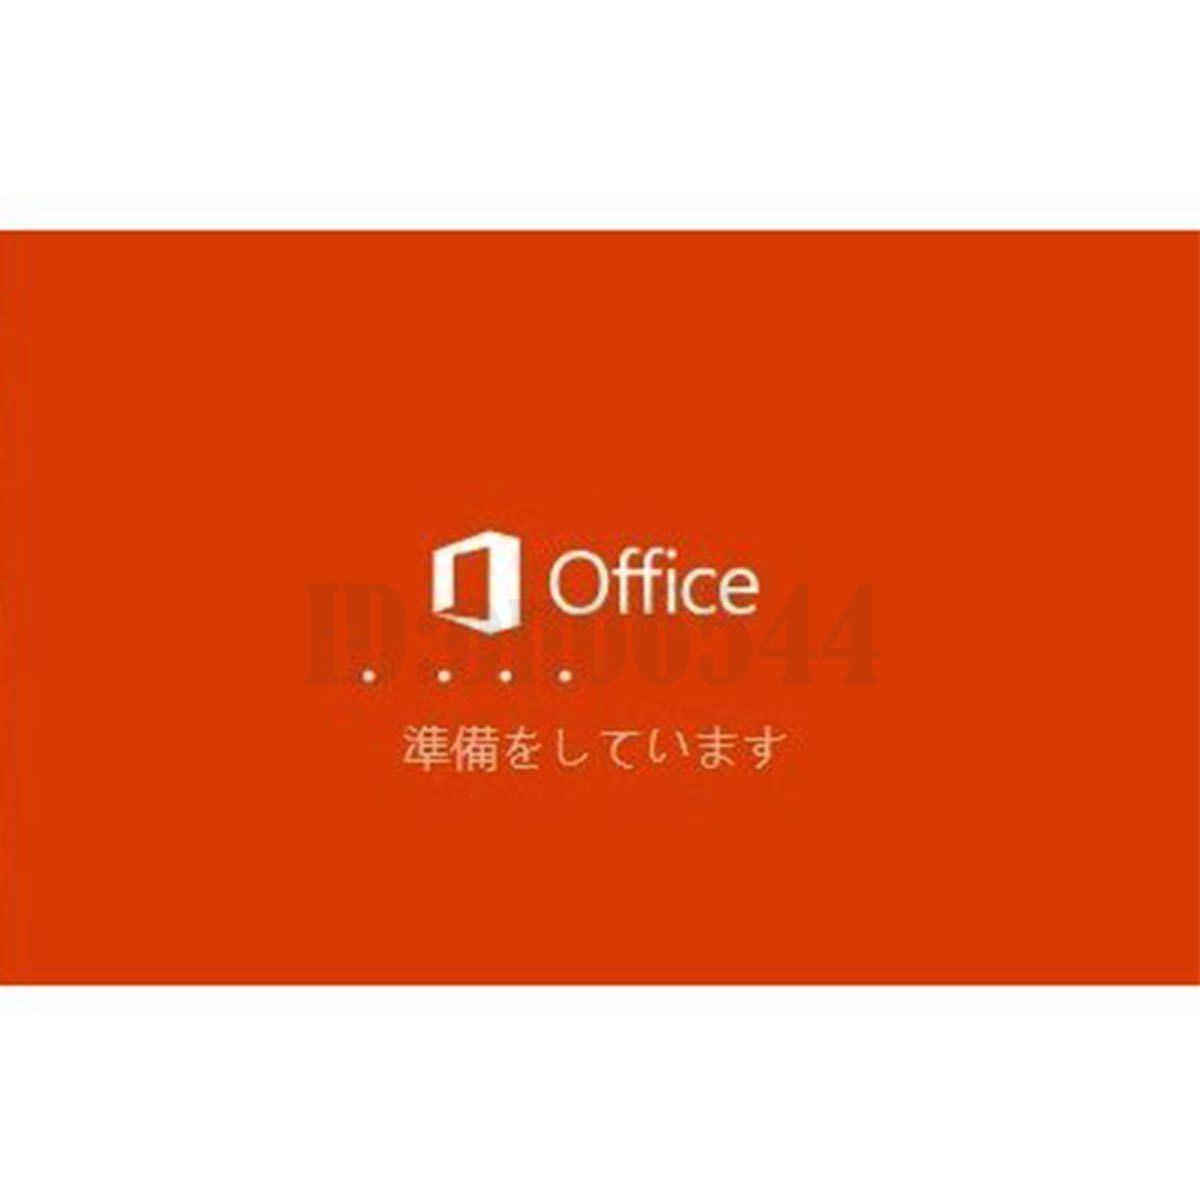 Office2021 ダウンロード版Microsoft Office 2021 Professional Plus プロダクトキー オフィス2021 正規認証保証 手順書あり サポート付きO_画像2